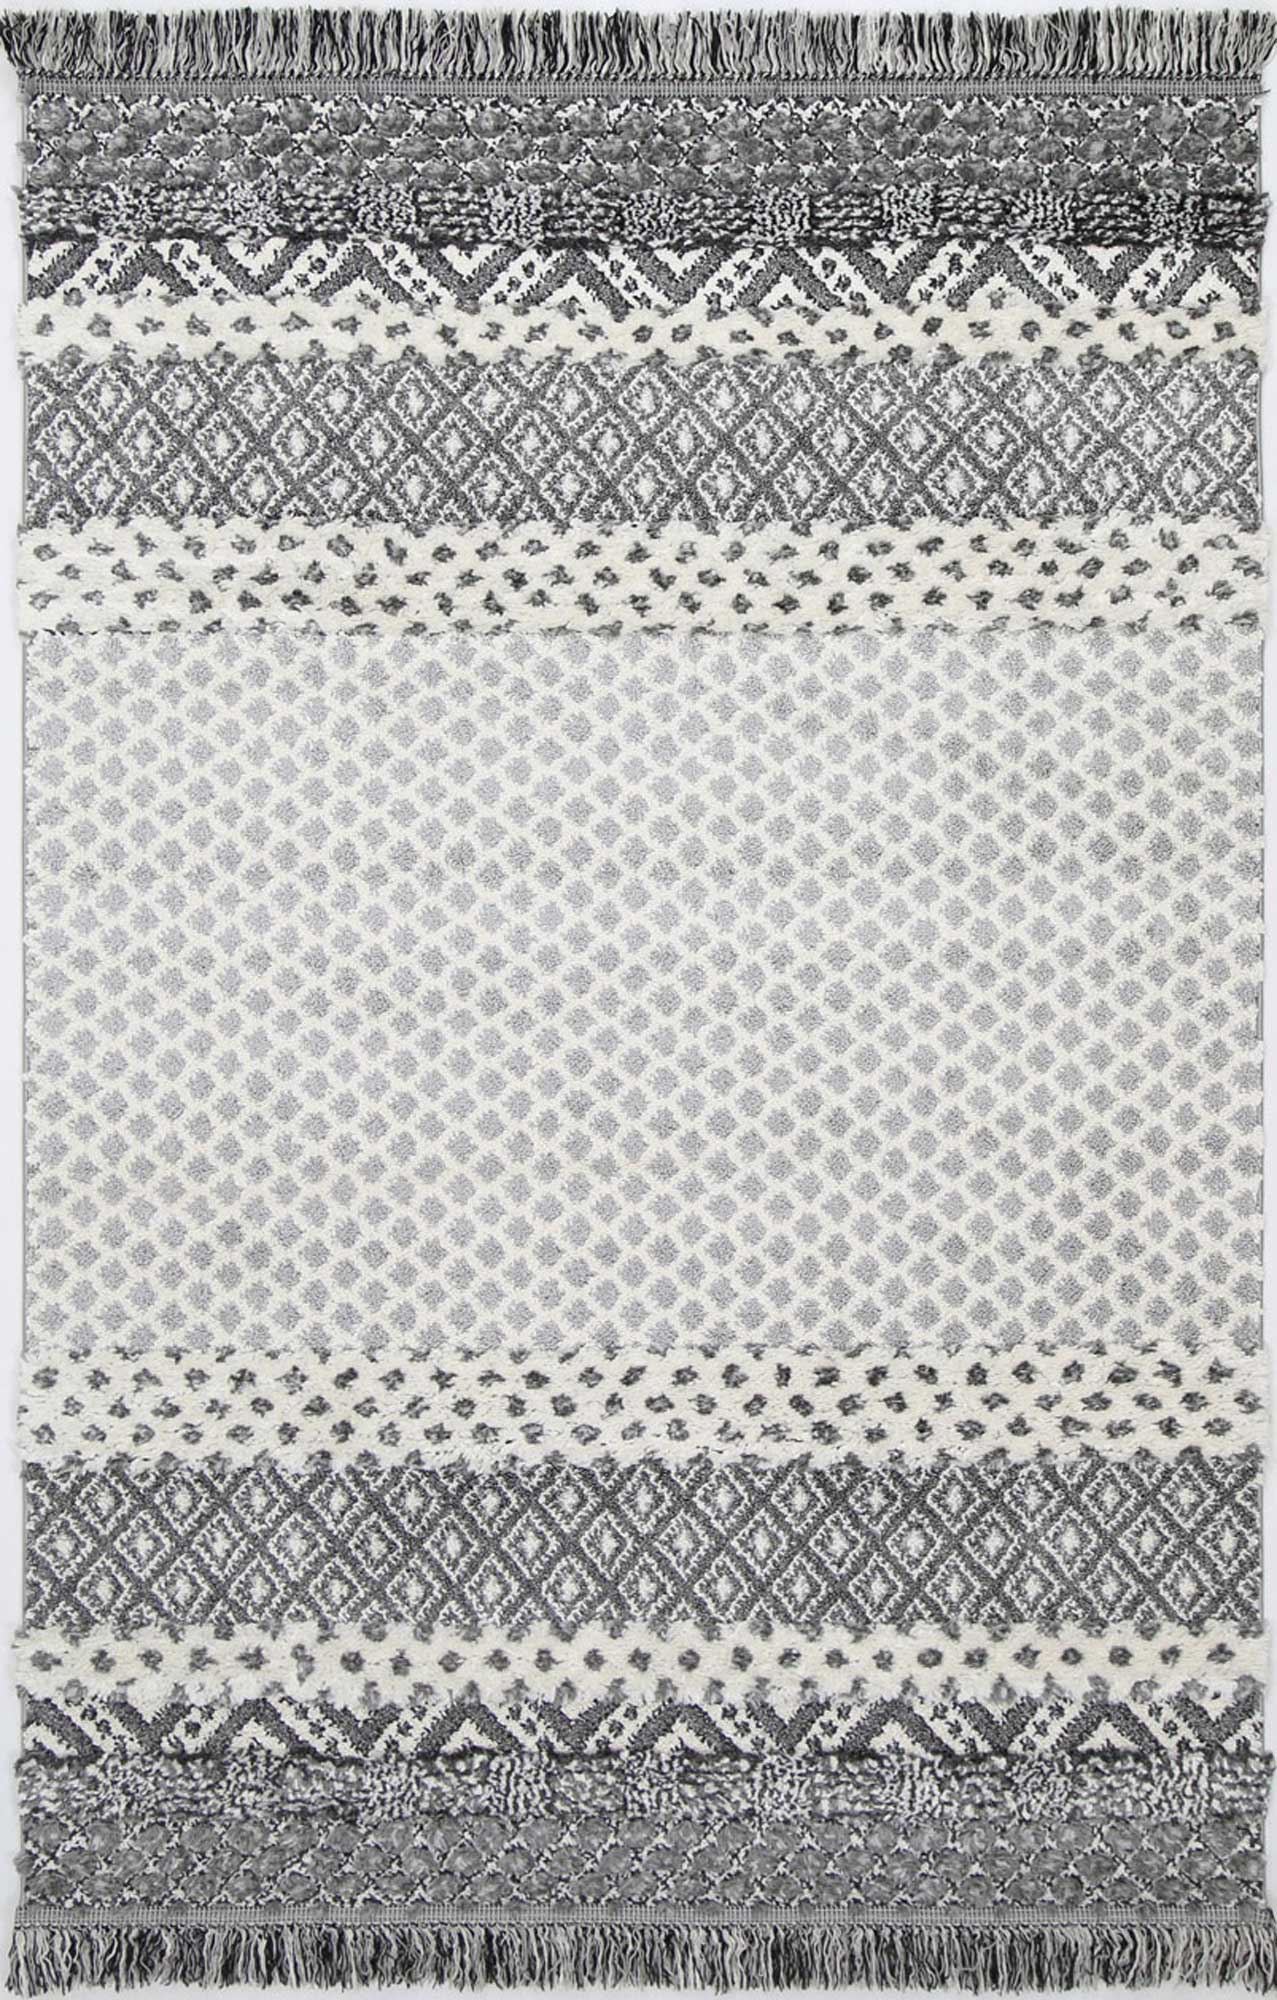 Kaza Imprint Ivory & Grey Rug